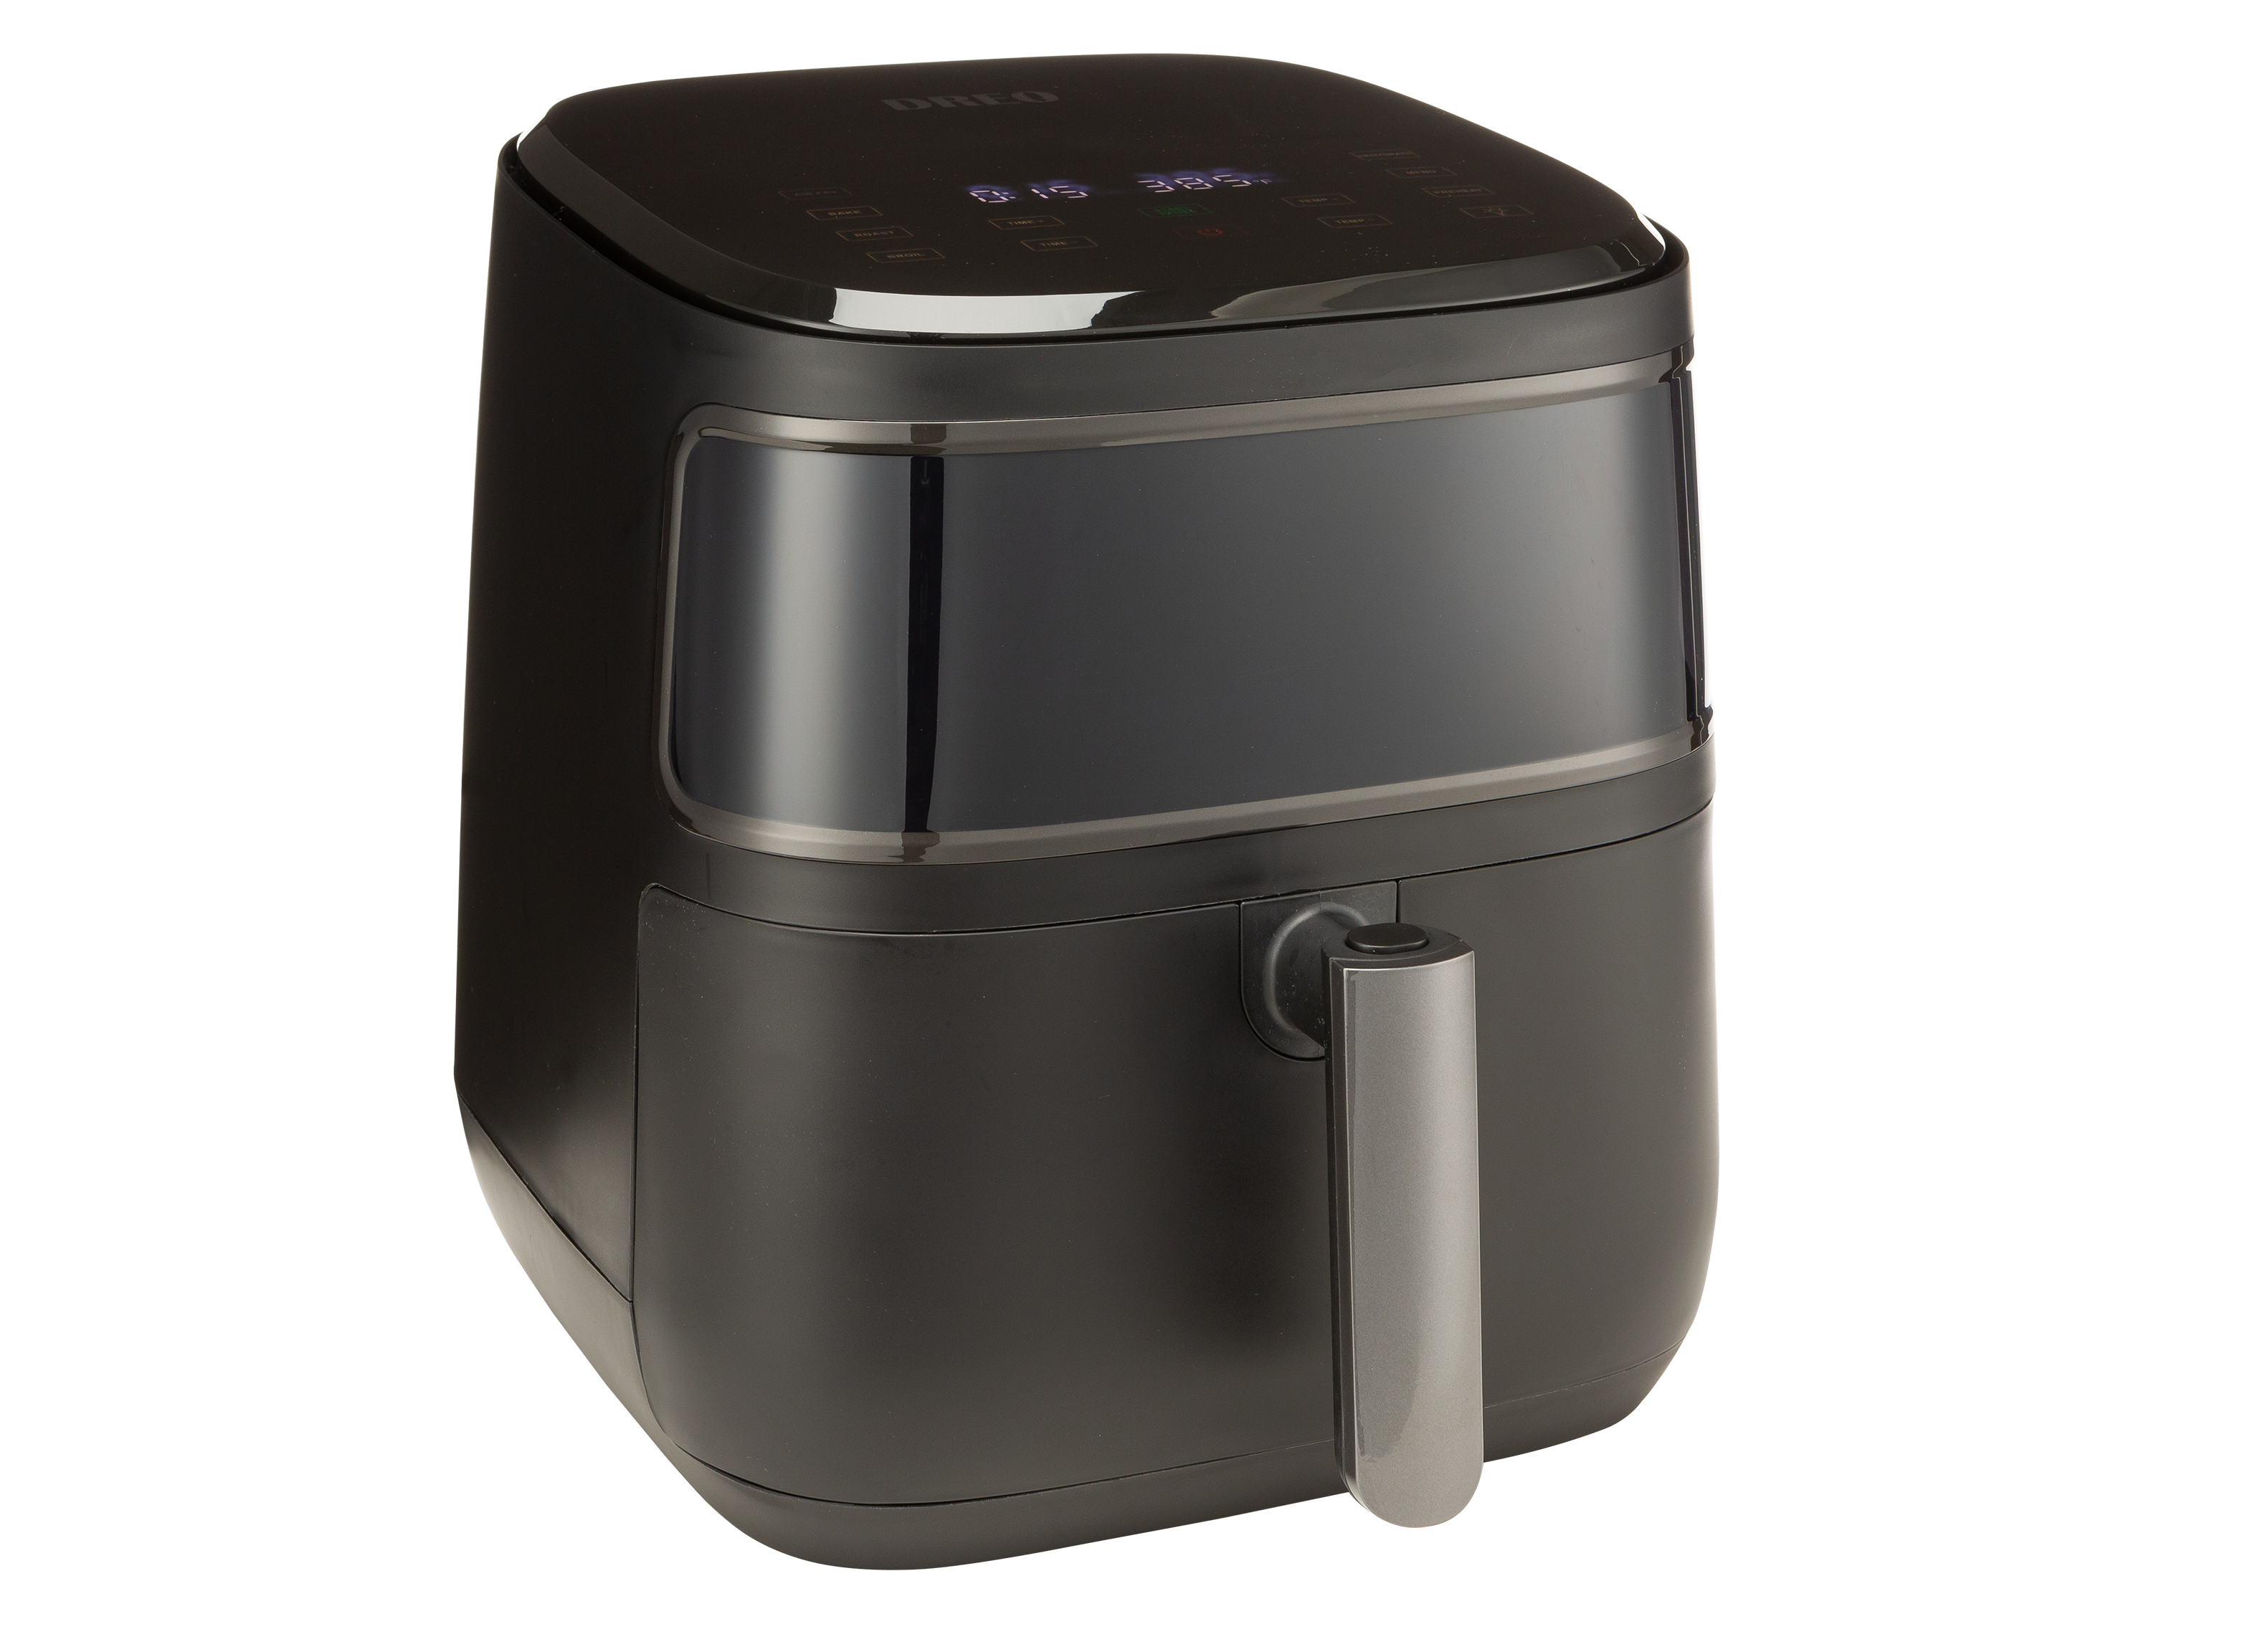 Dreo Air Fryer Pro Max, 11-in-1 Digital Air Fryer Oven Cooker Air